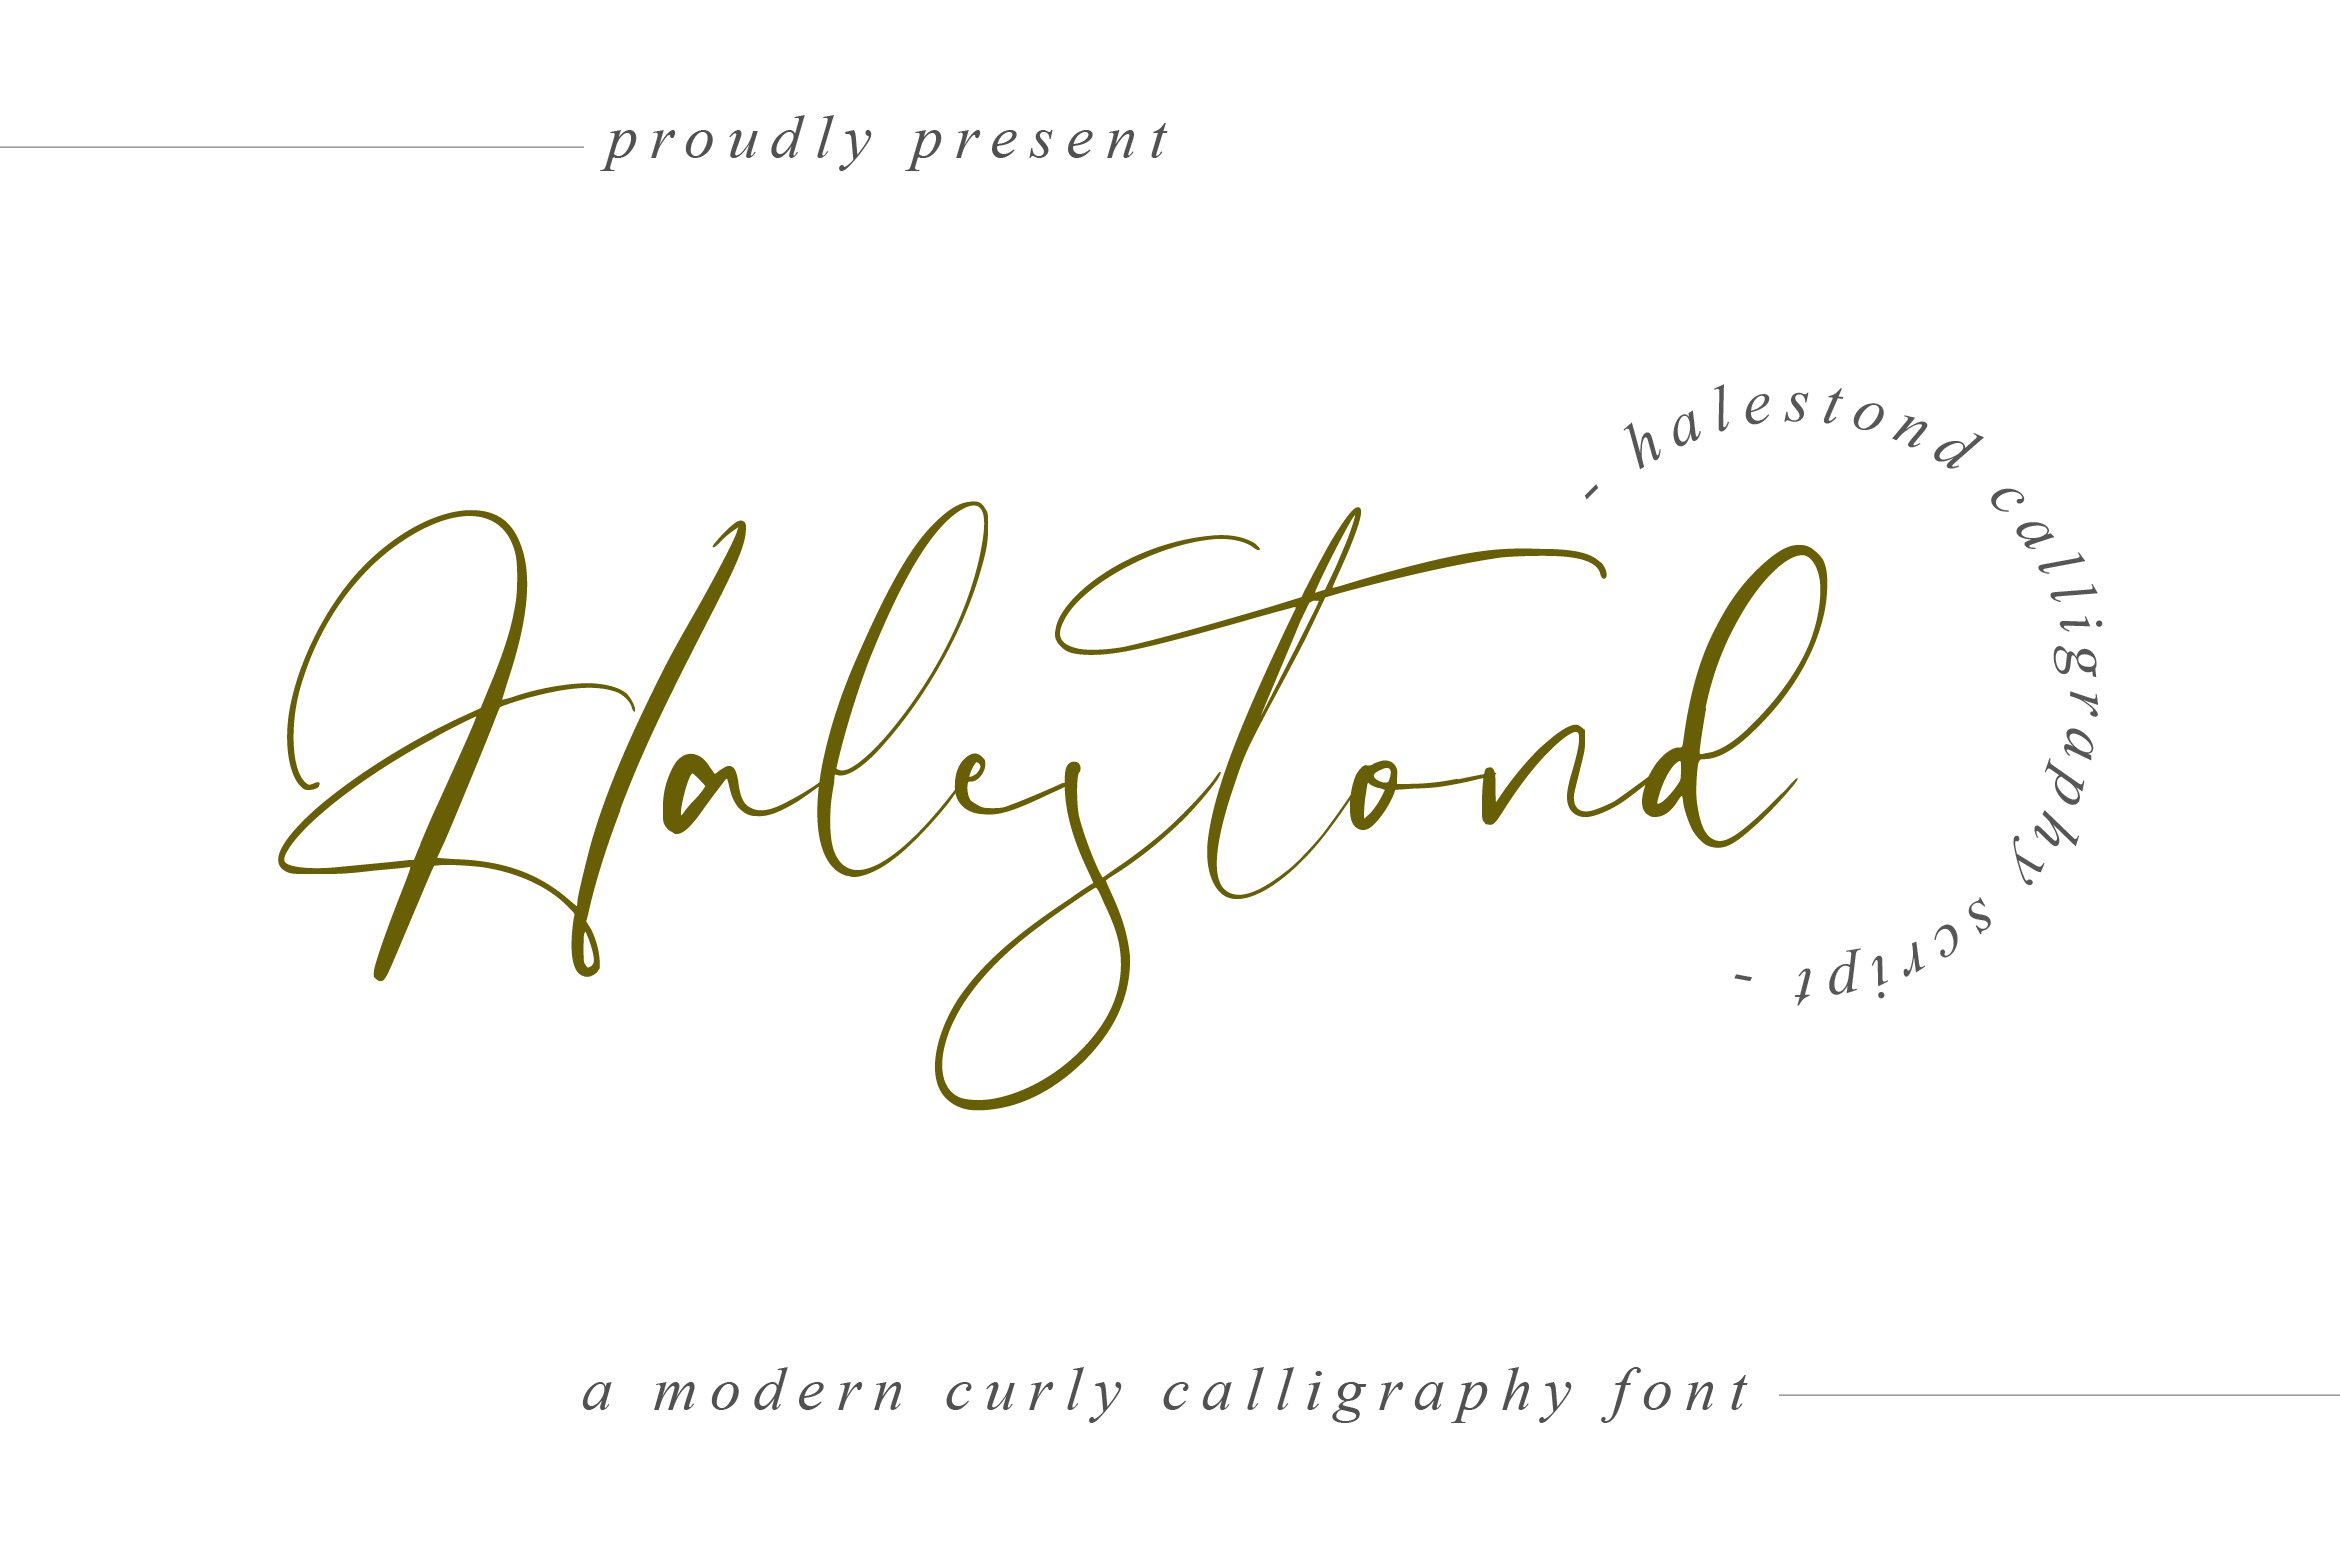 Halestond - Wedding Script Font cover image.